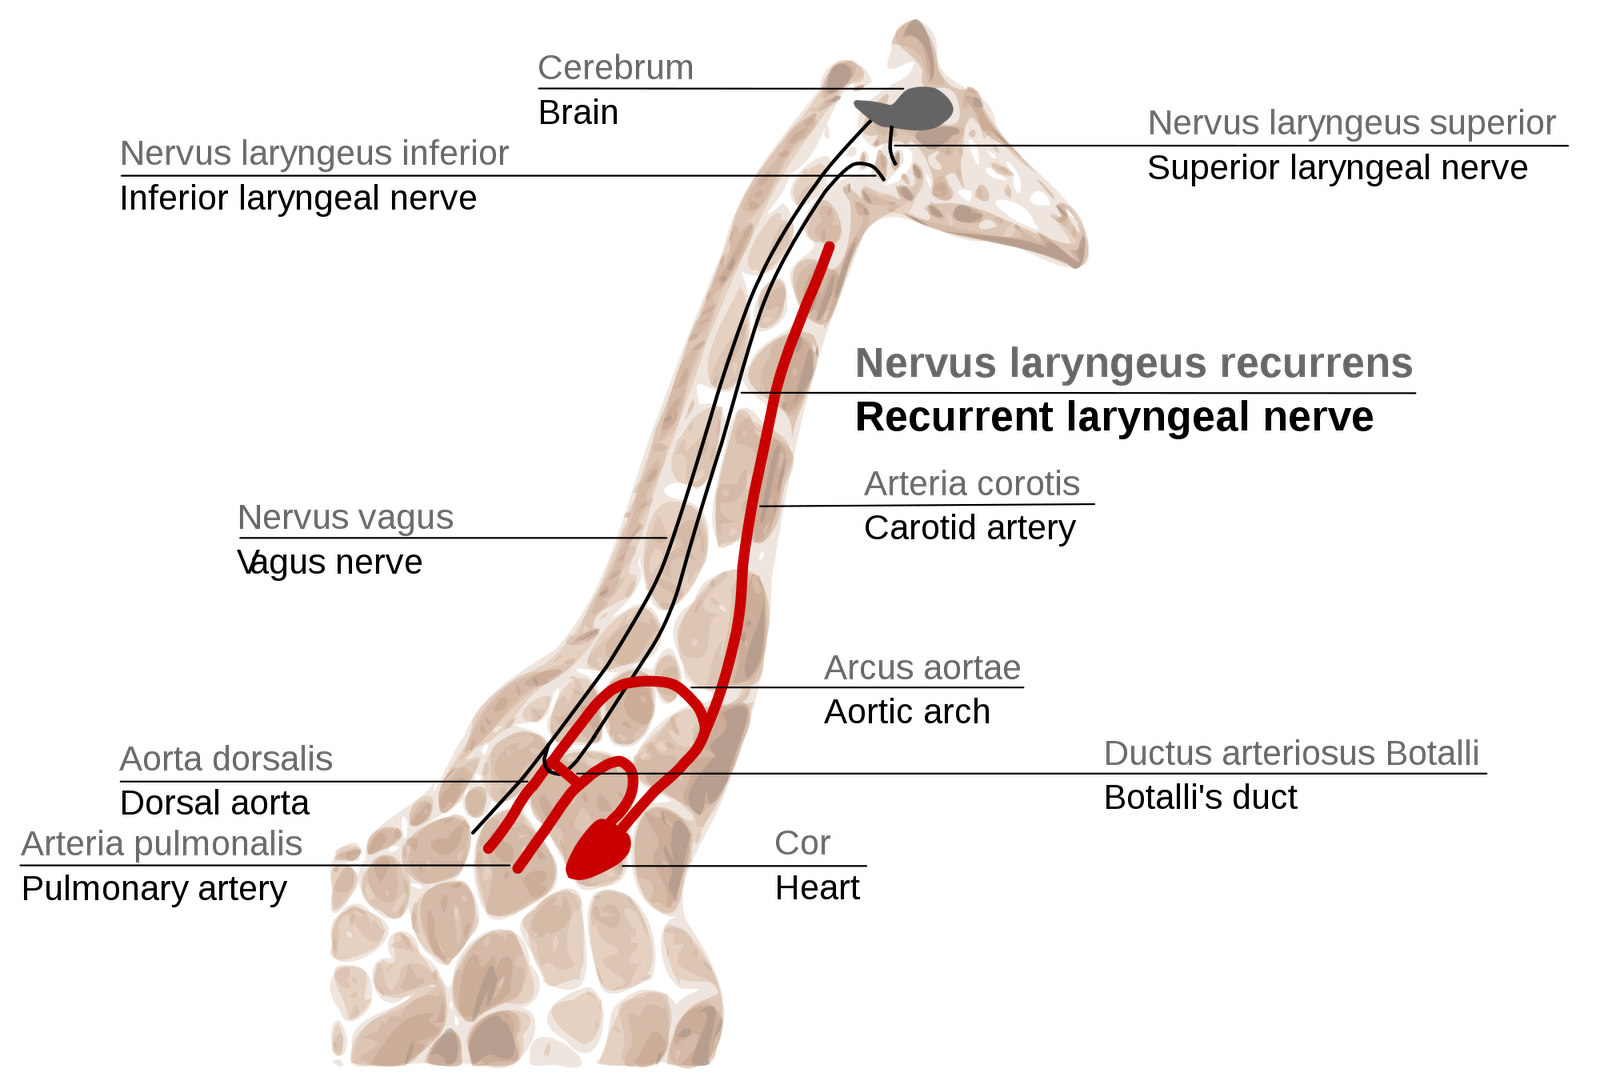 Giraffe's laryngeal nerve, easily explained by evolution; paints of picture of an evil, joker designer otherwise.